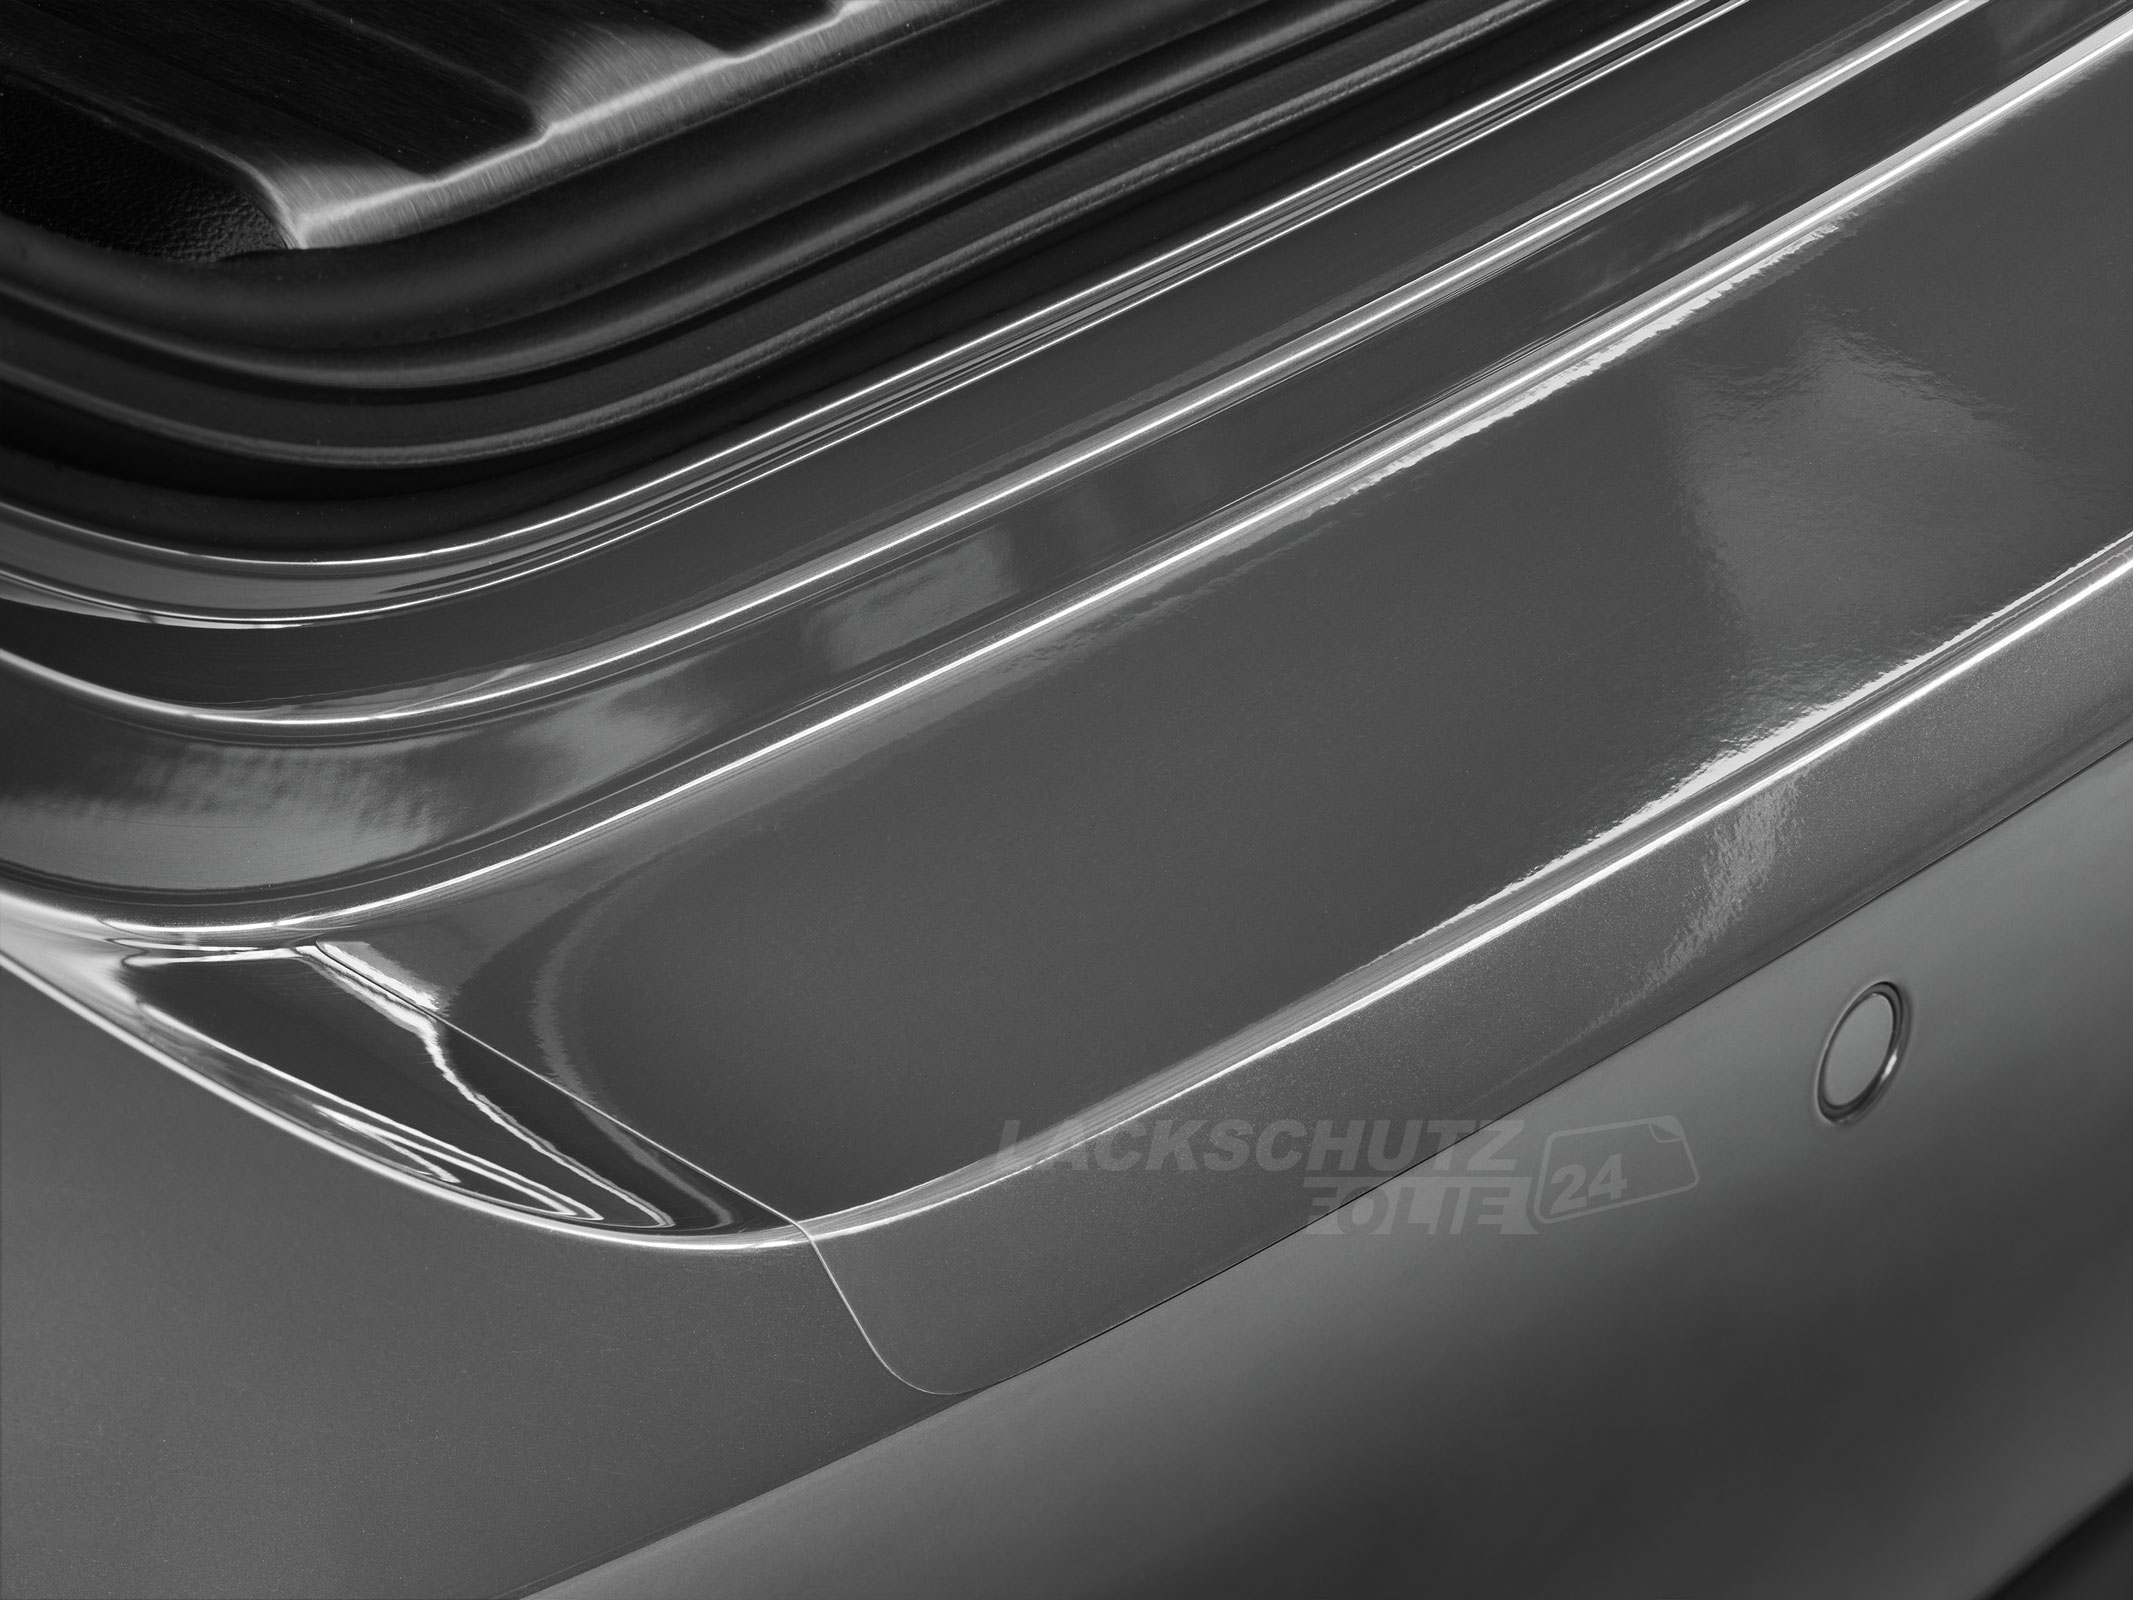 Ladekantenschutzfolie - Transparent Glatt Hochglänzend 240 µm stark für Subaru Levorg ab BJ 2015